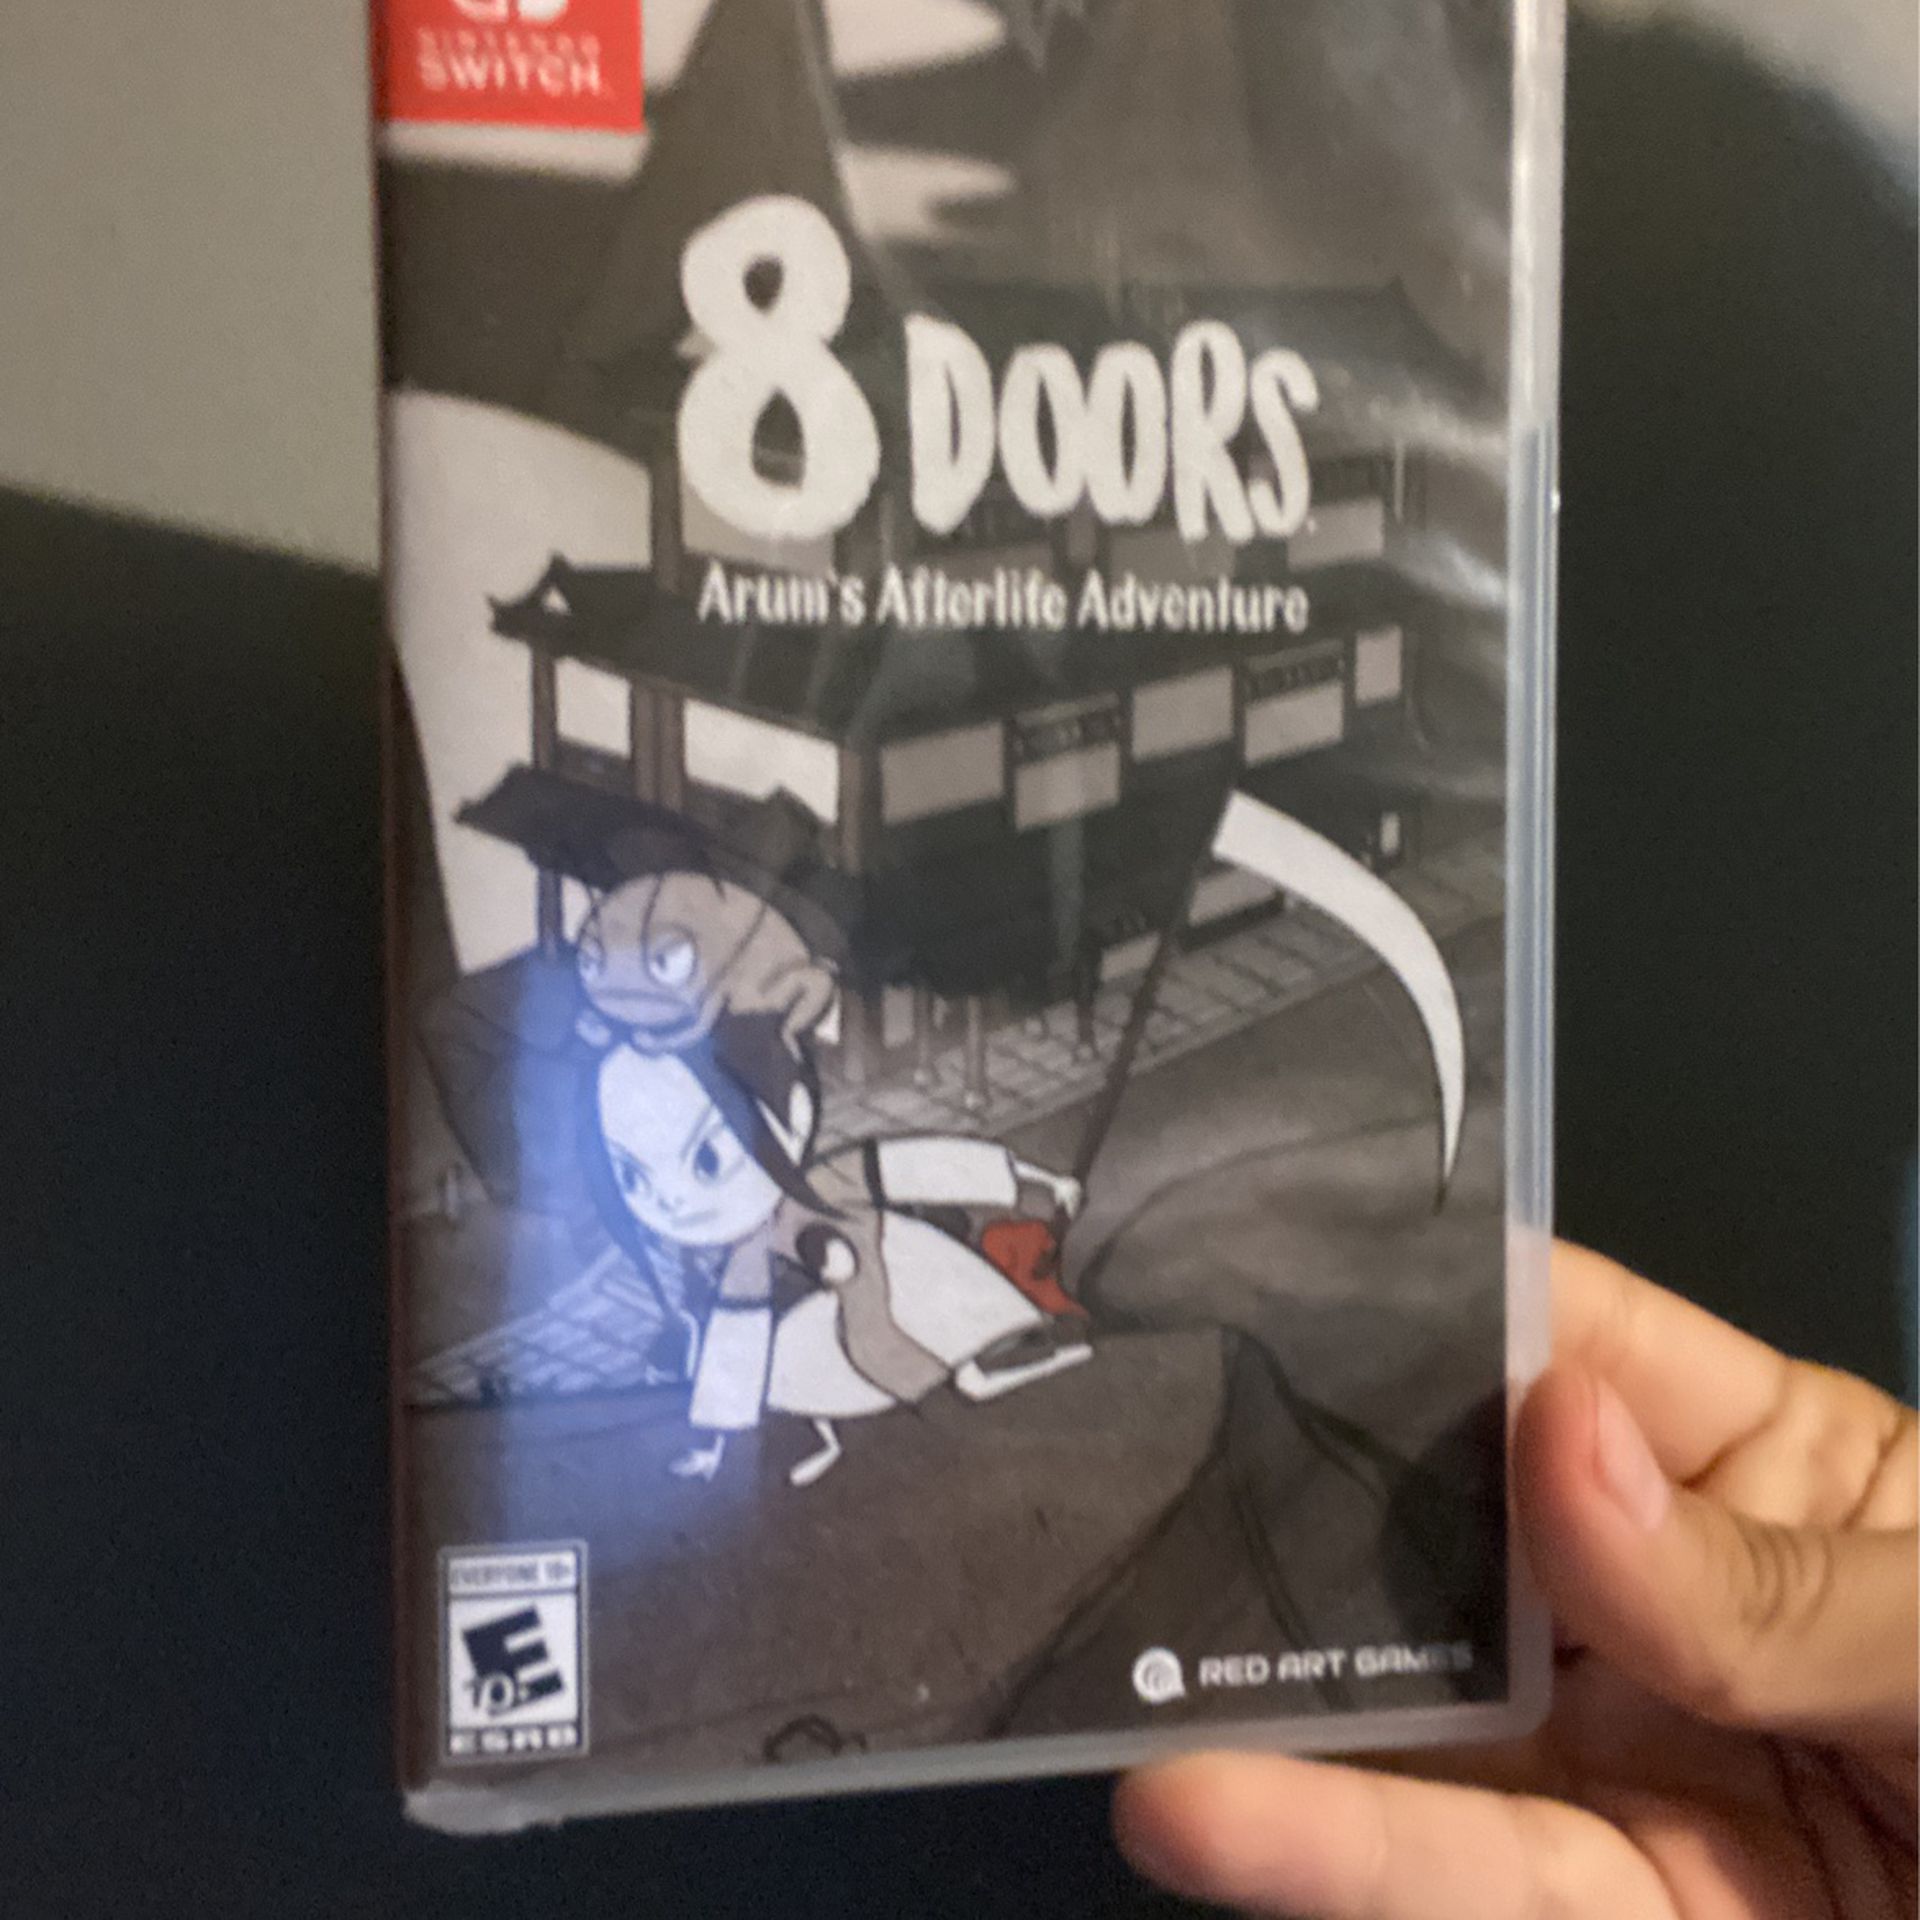 8 Doors Game For Nintendo Switch